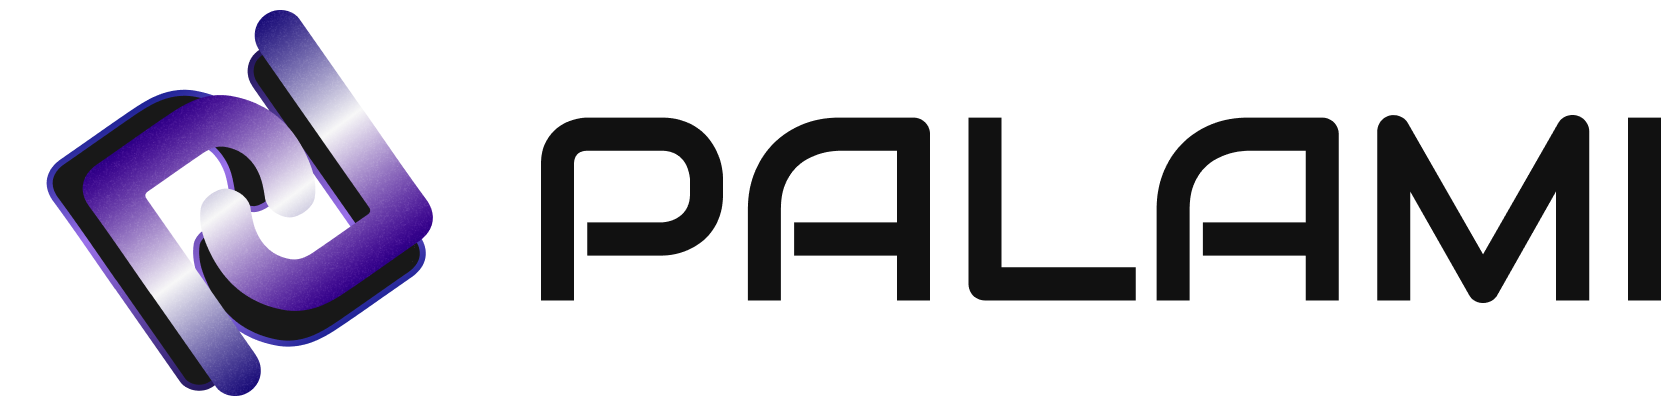 PALAMI Group Logo With PALAMI Name